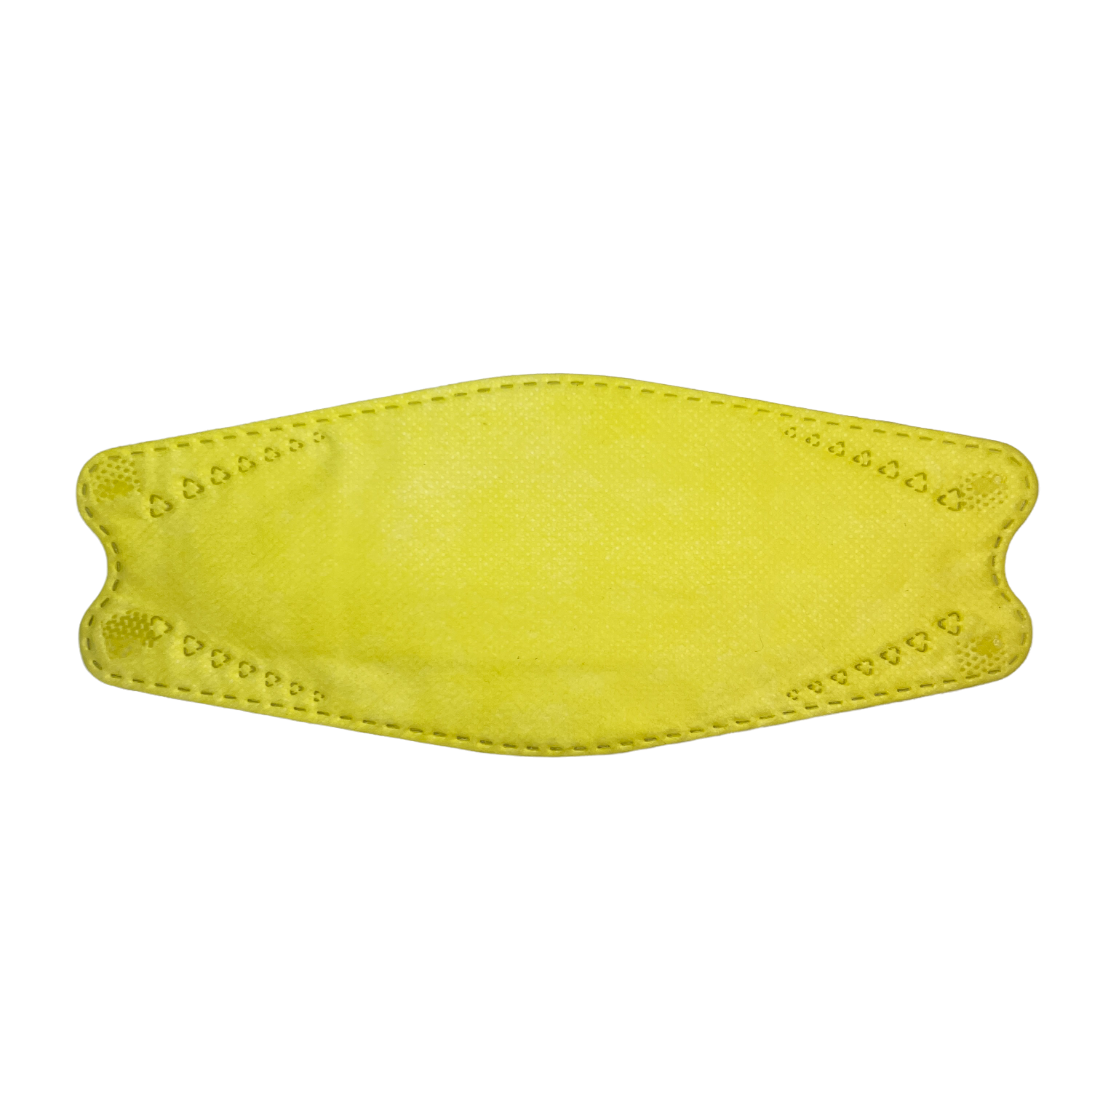 Adult Disposable Mask Masks SPIRIT SPARKPLUGS Light Yellow  